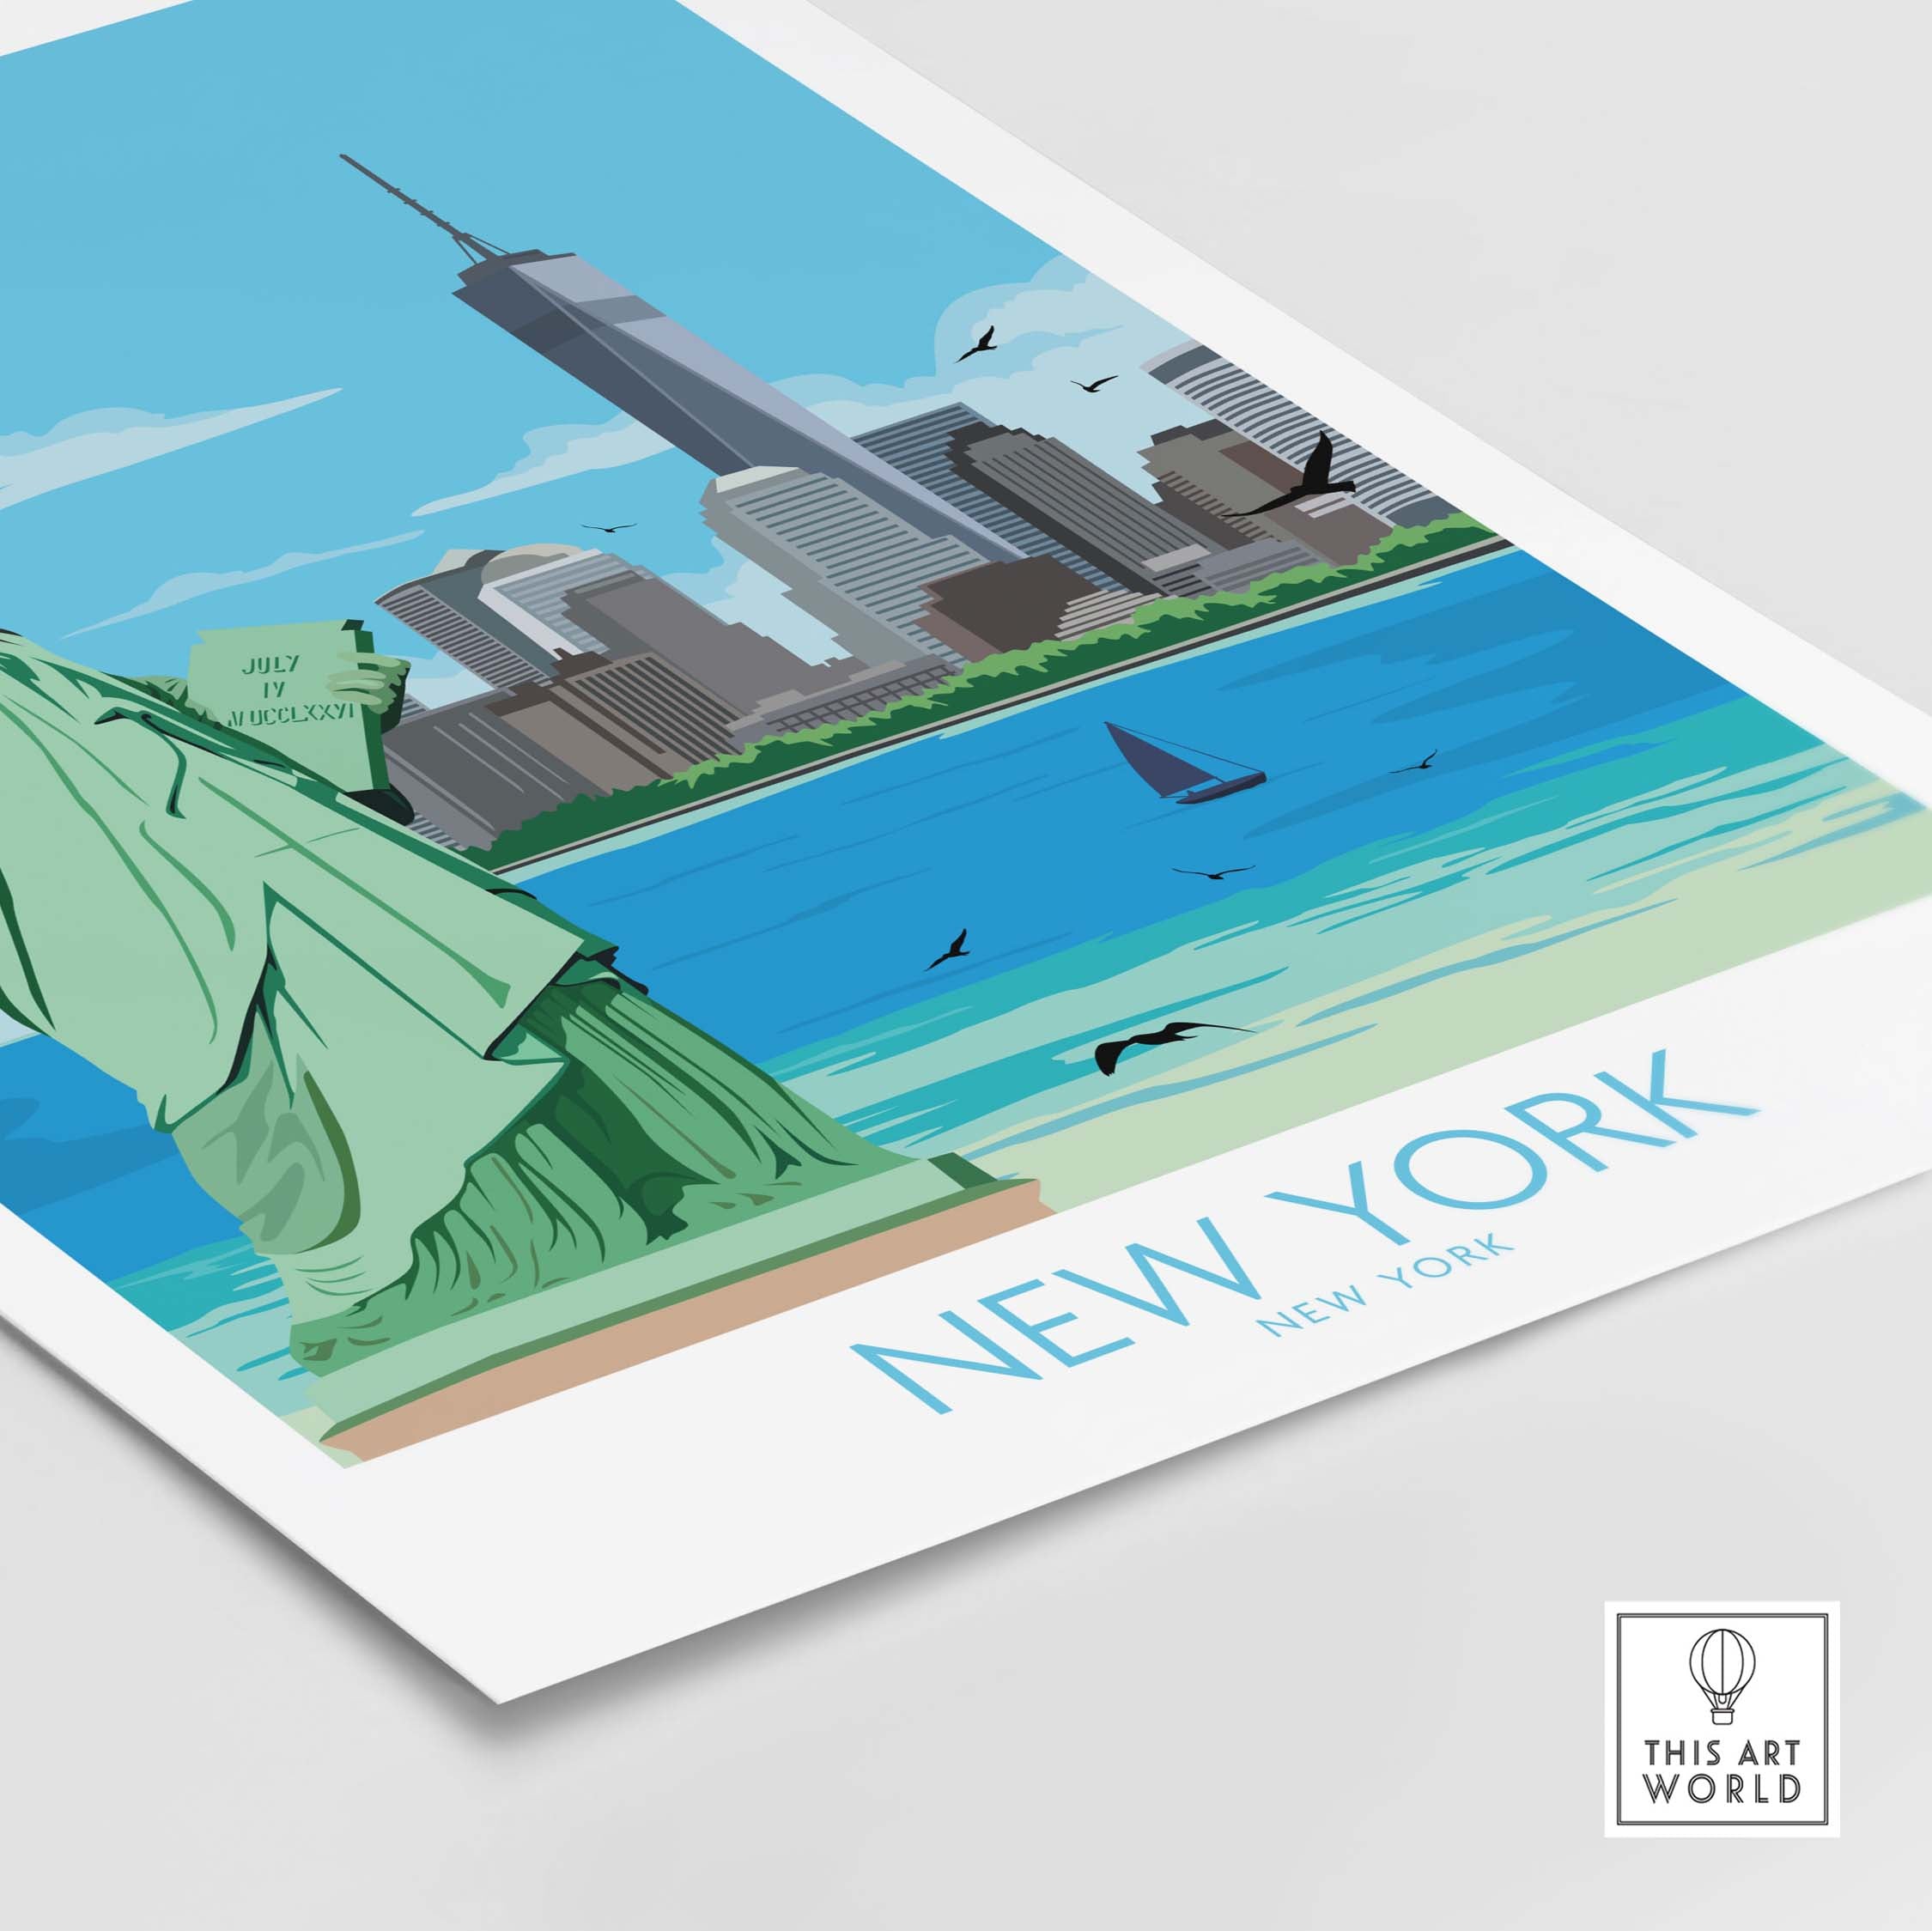 new york city poster